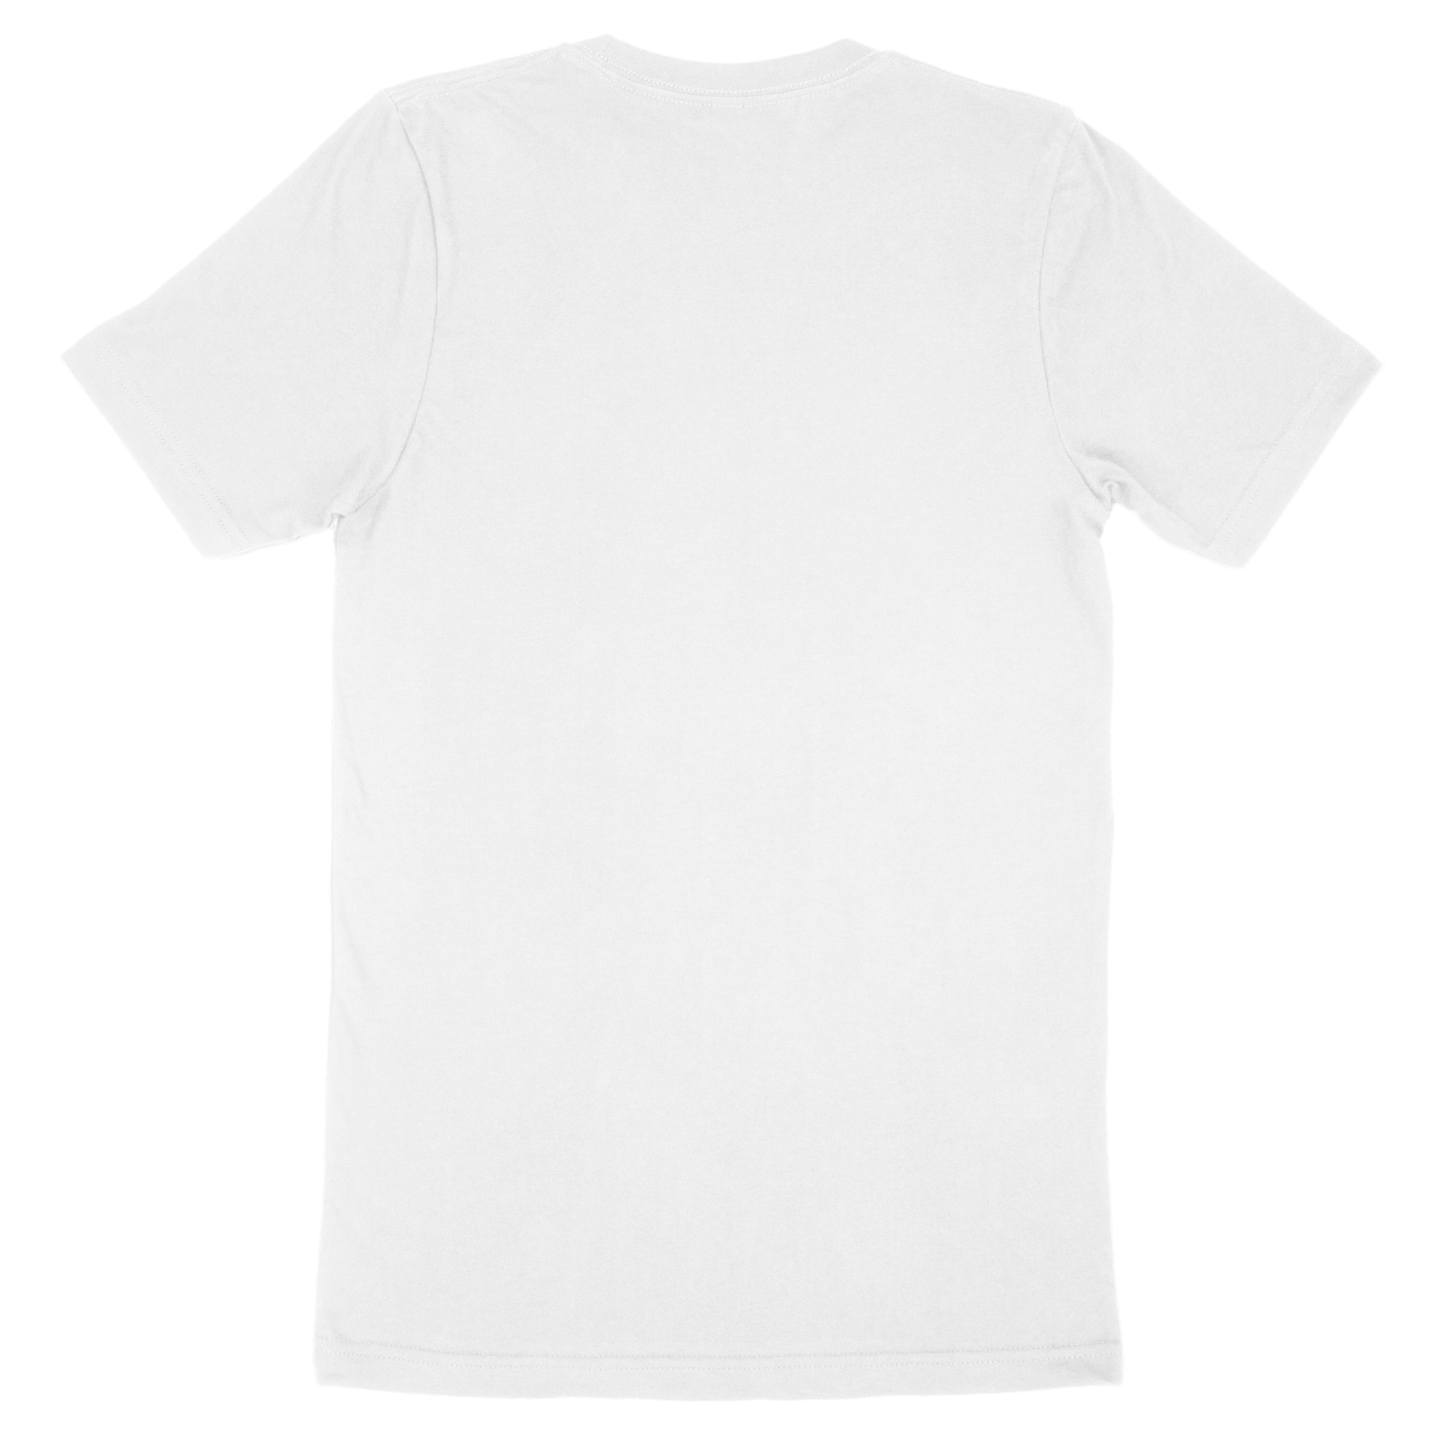 Mr. Vinyl T-Shirt - White